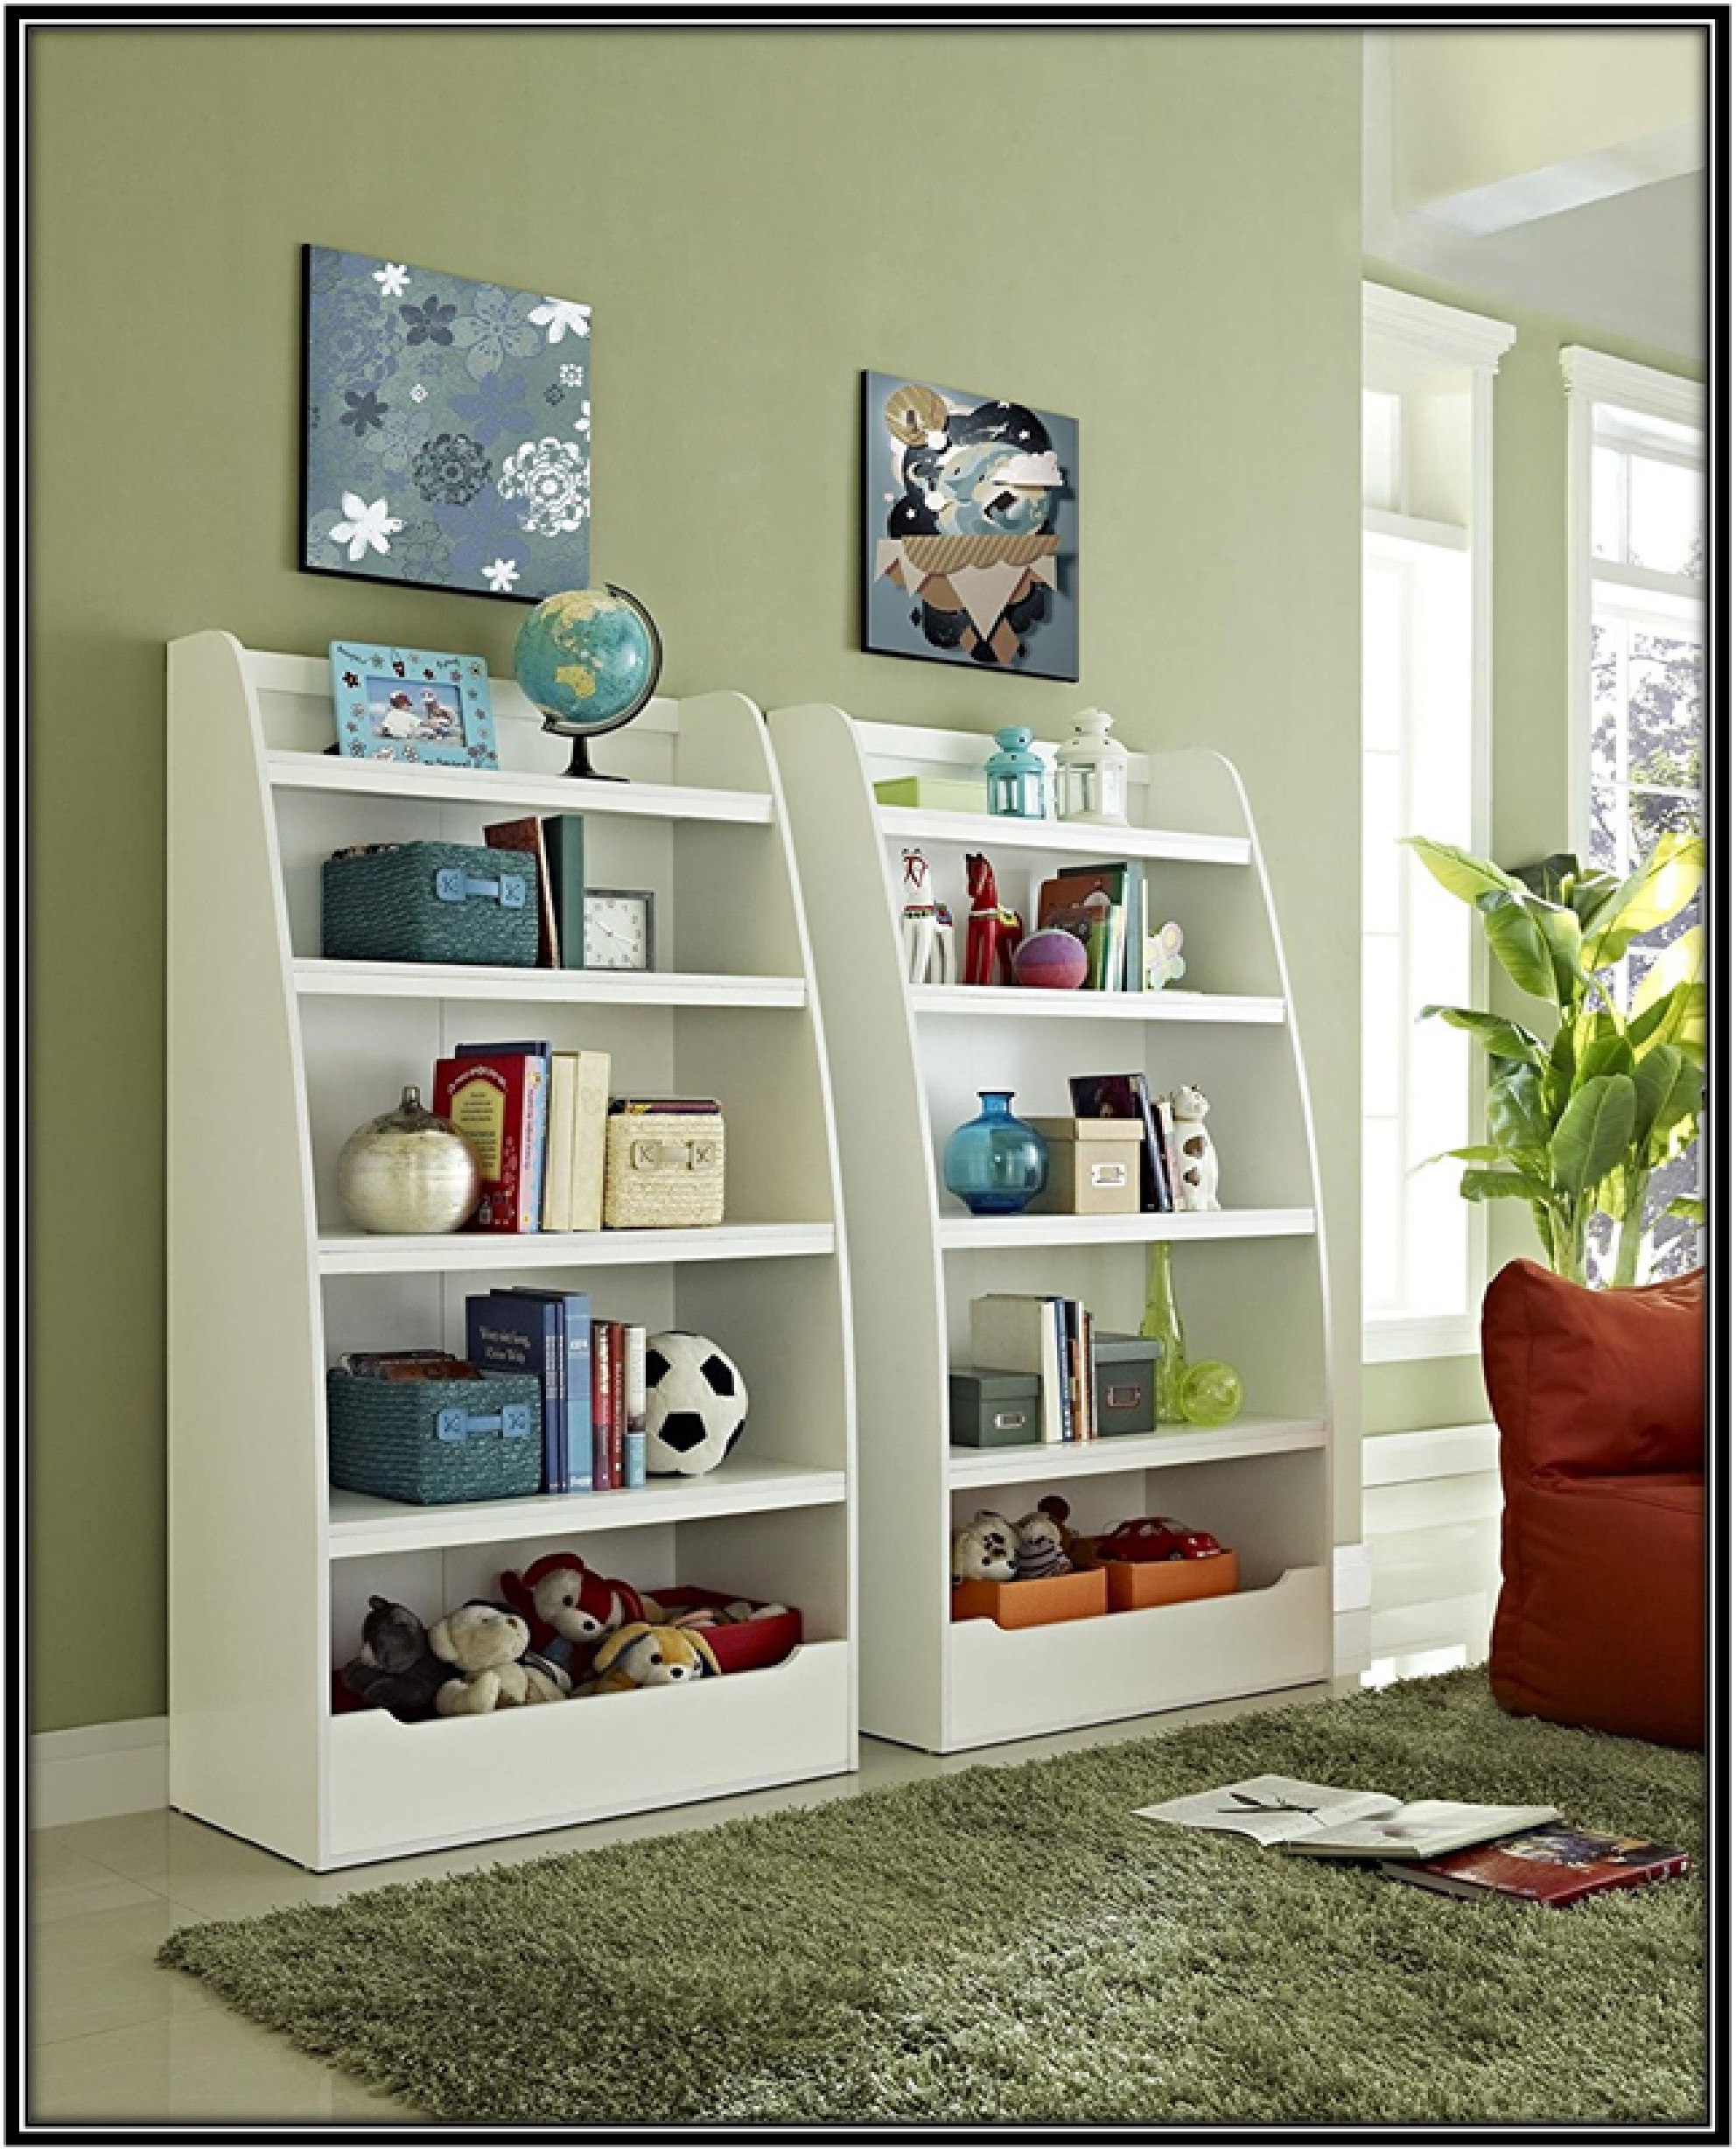 Organizing books in kid’s room - home decor ideas